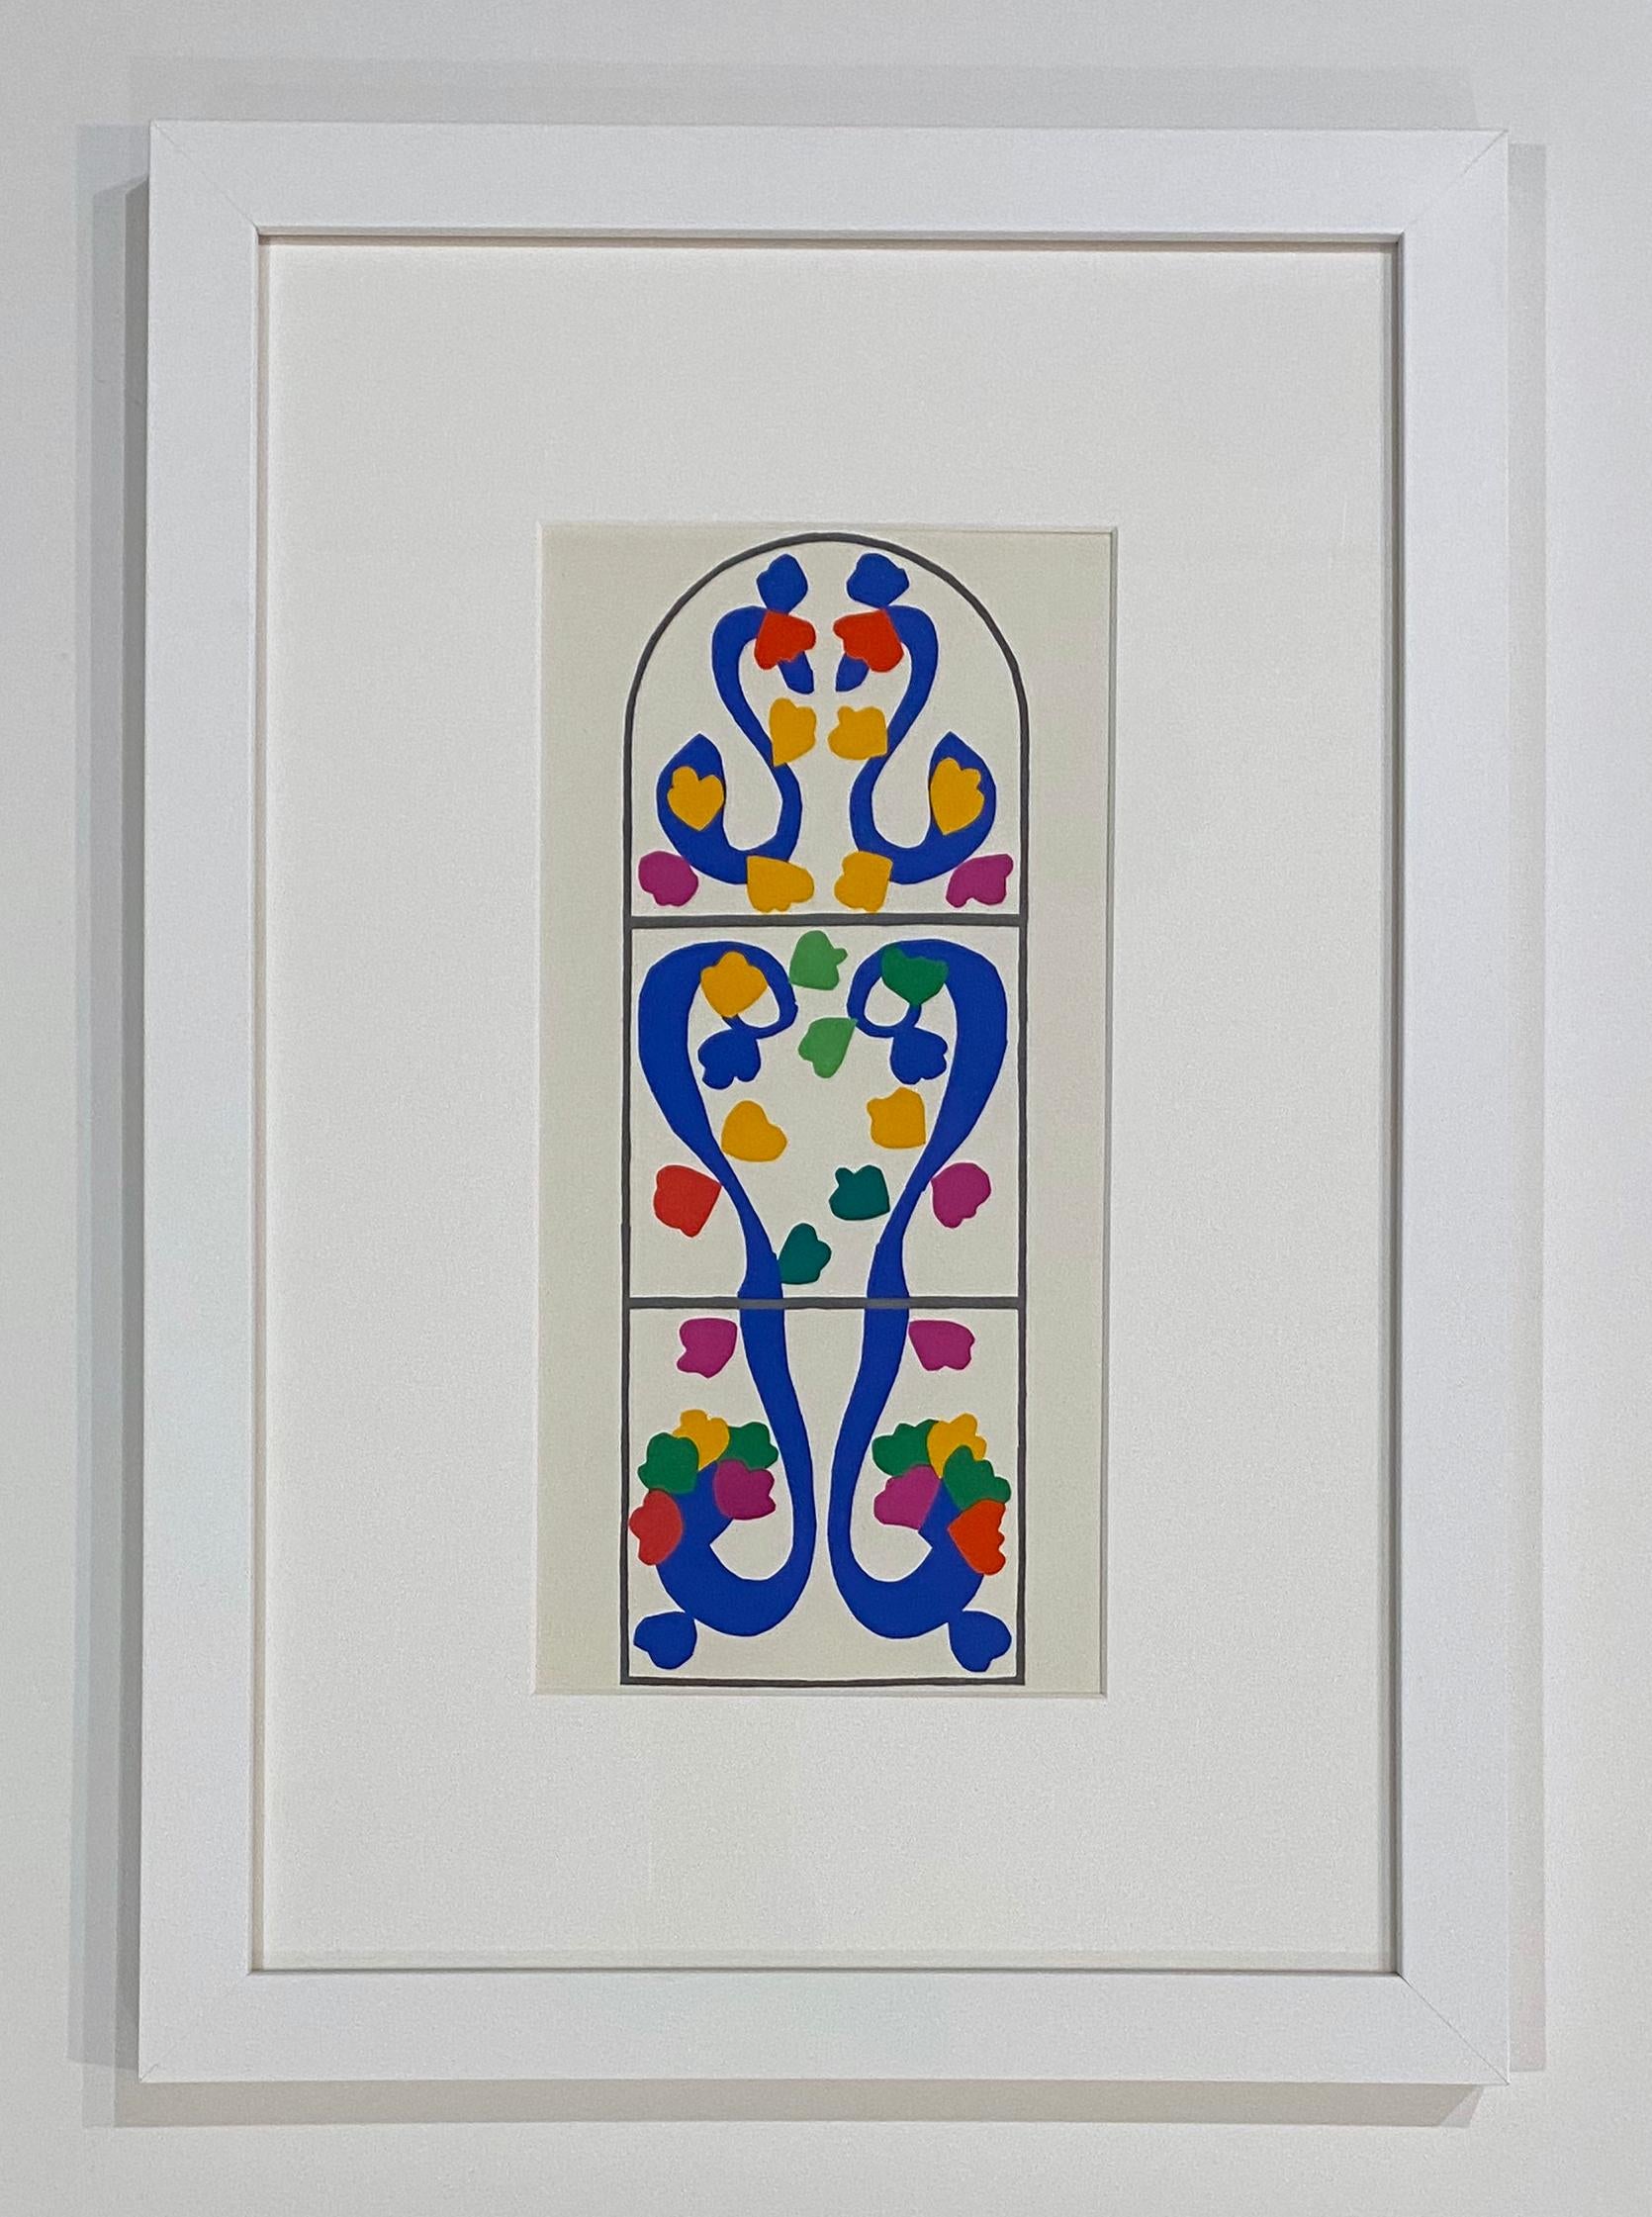 Vigne - Print by (after) Henri Matisse